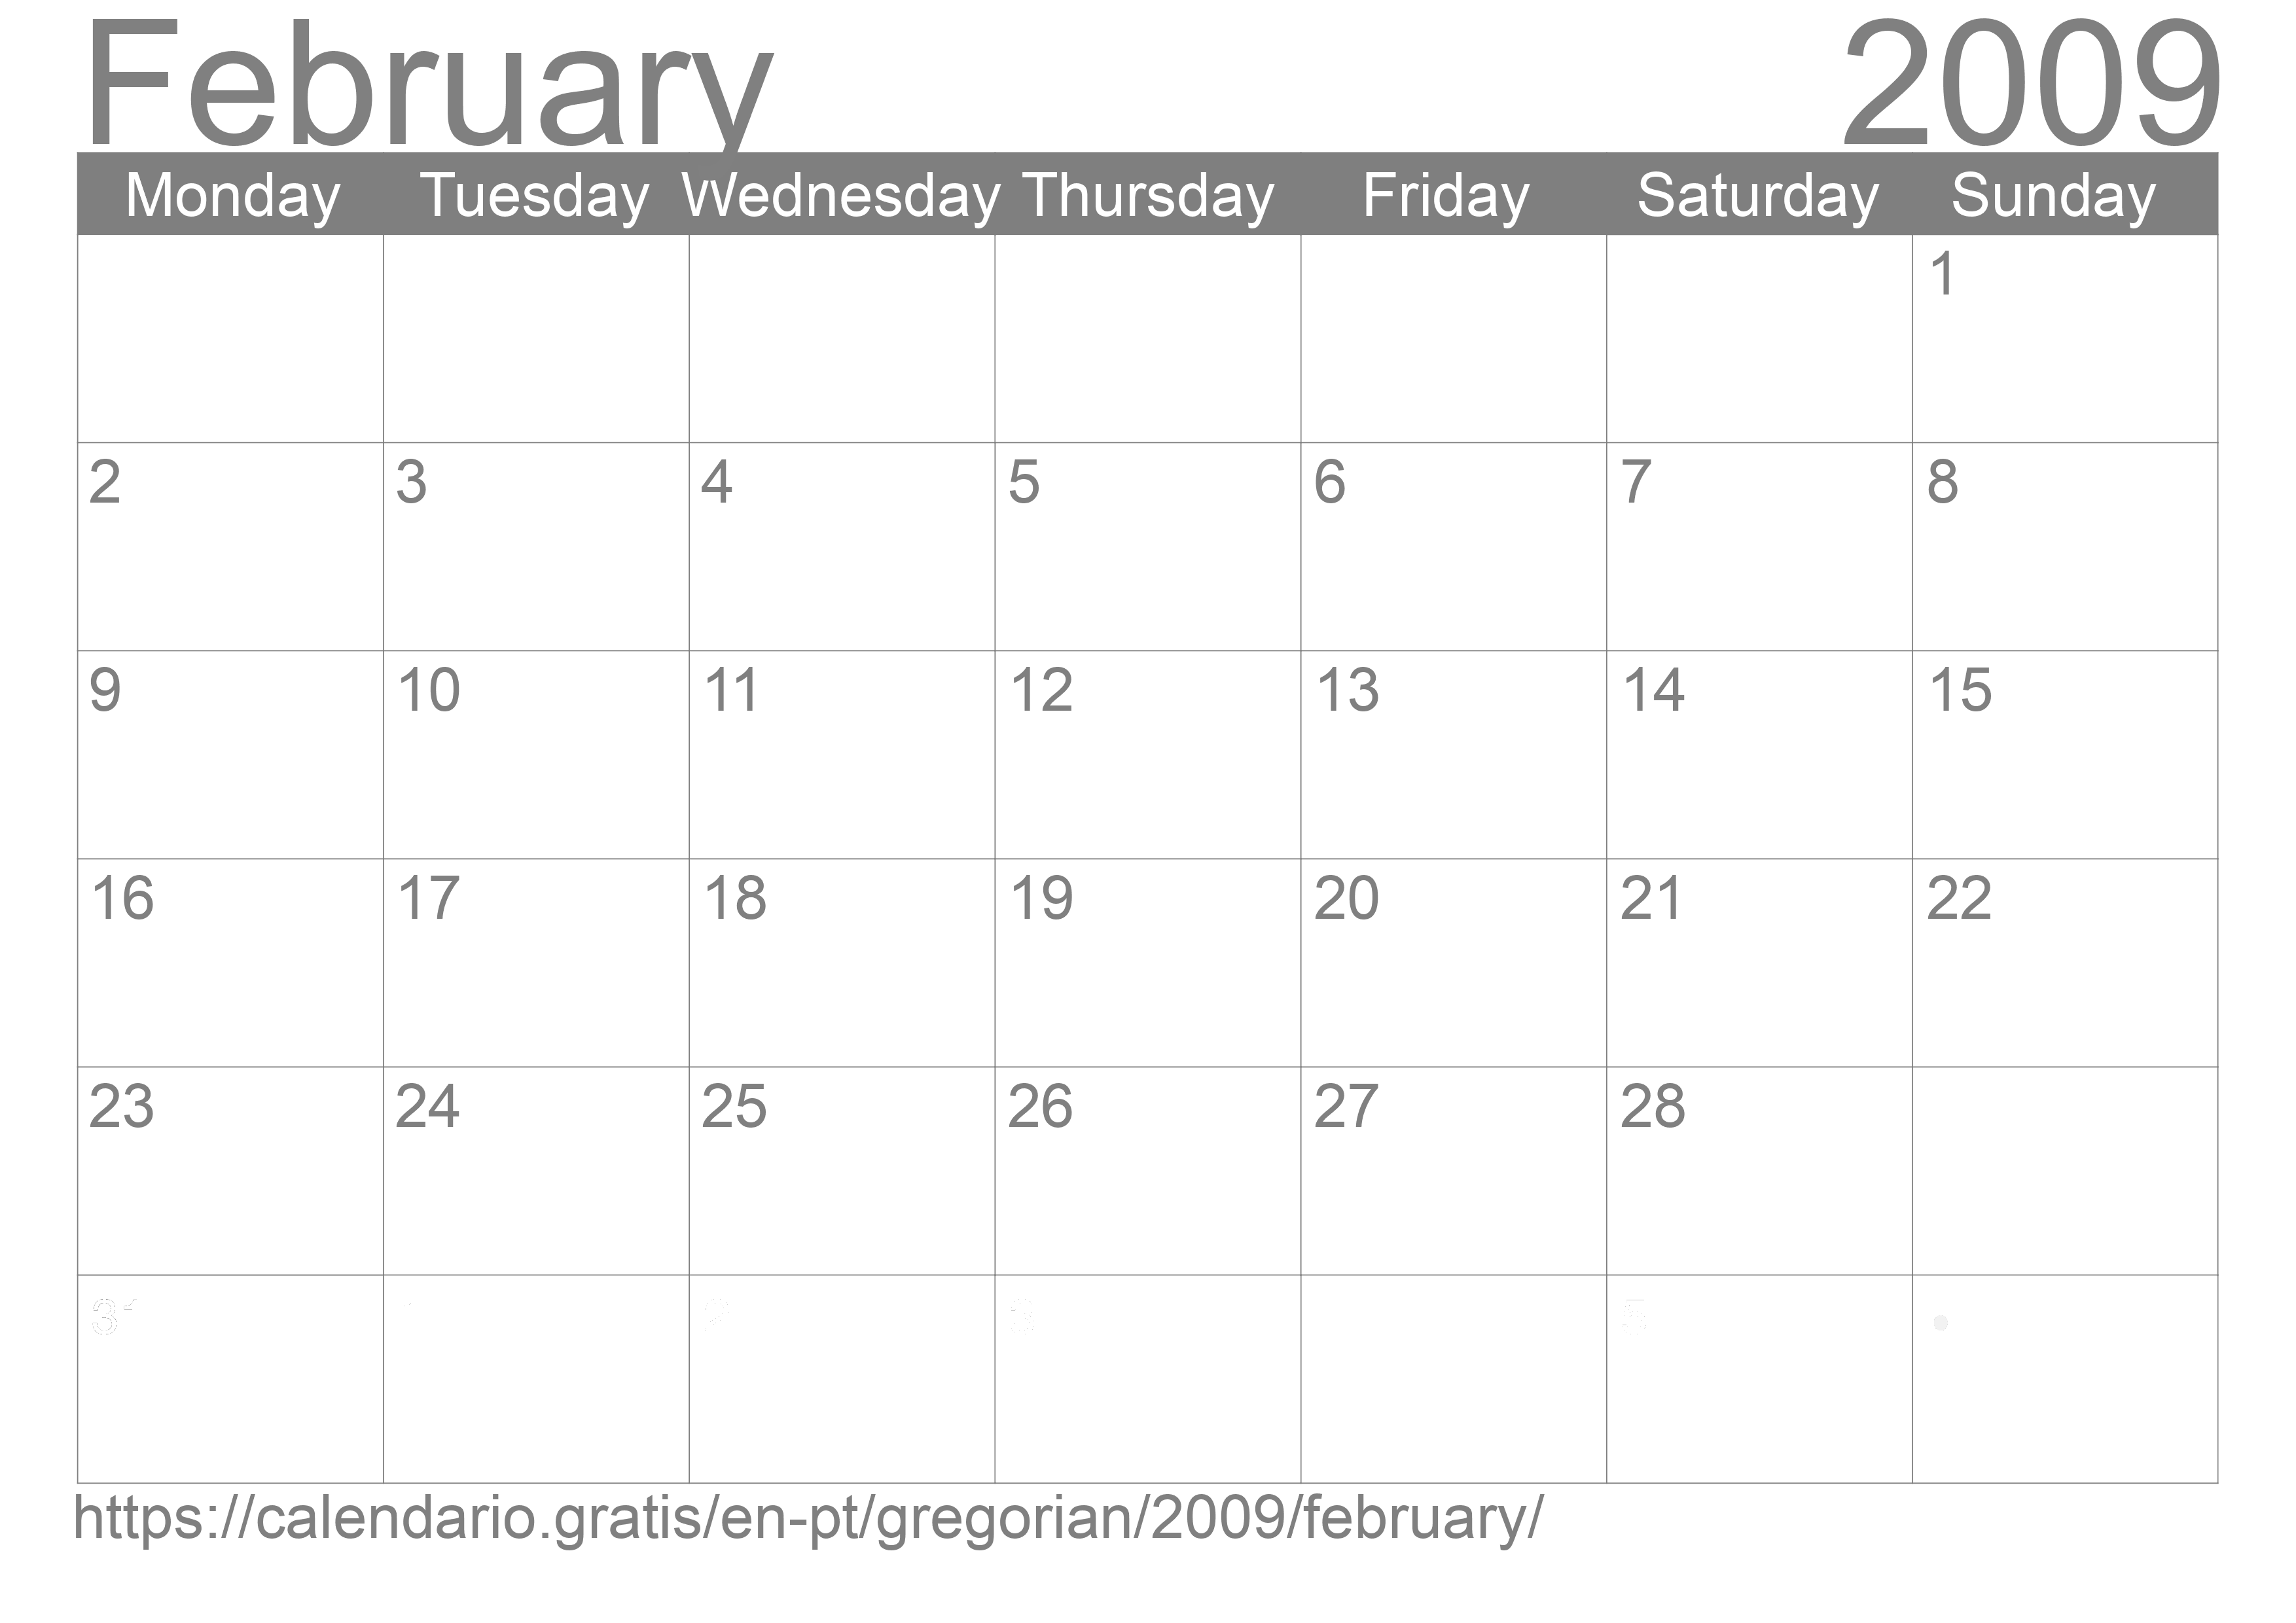 Calendar February 2009 to print